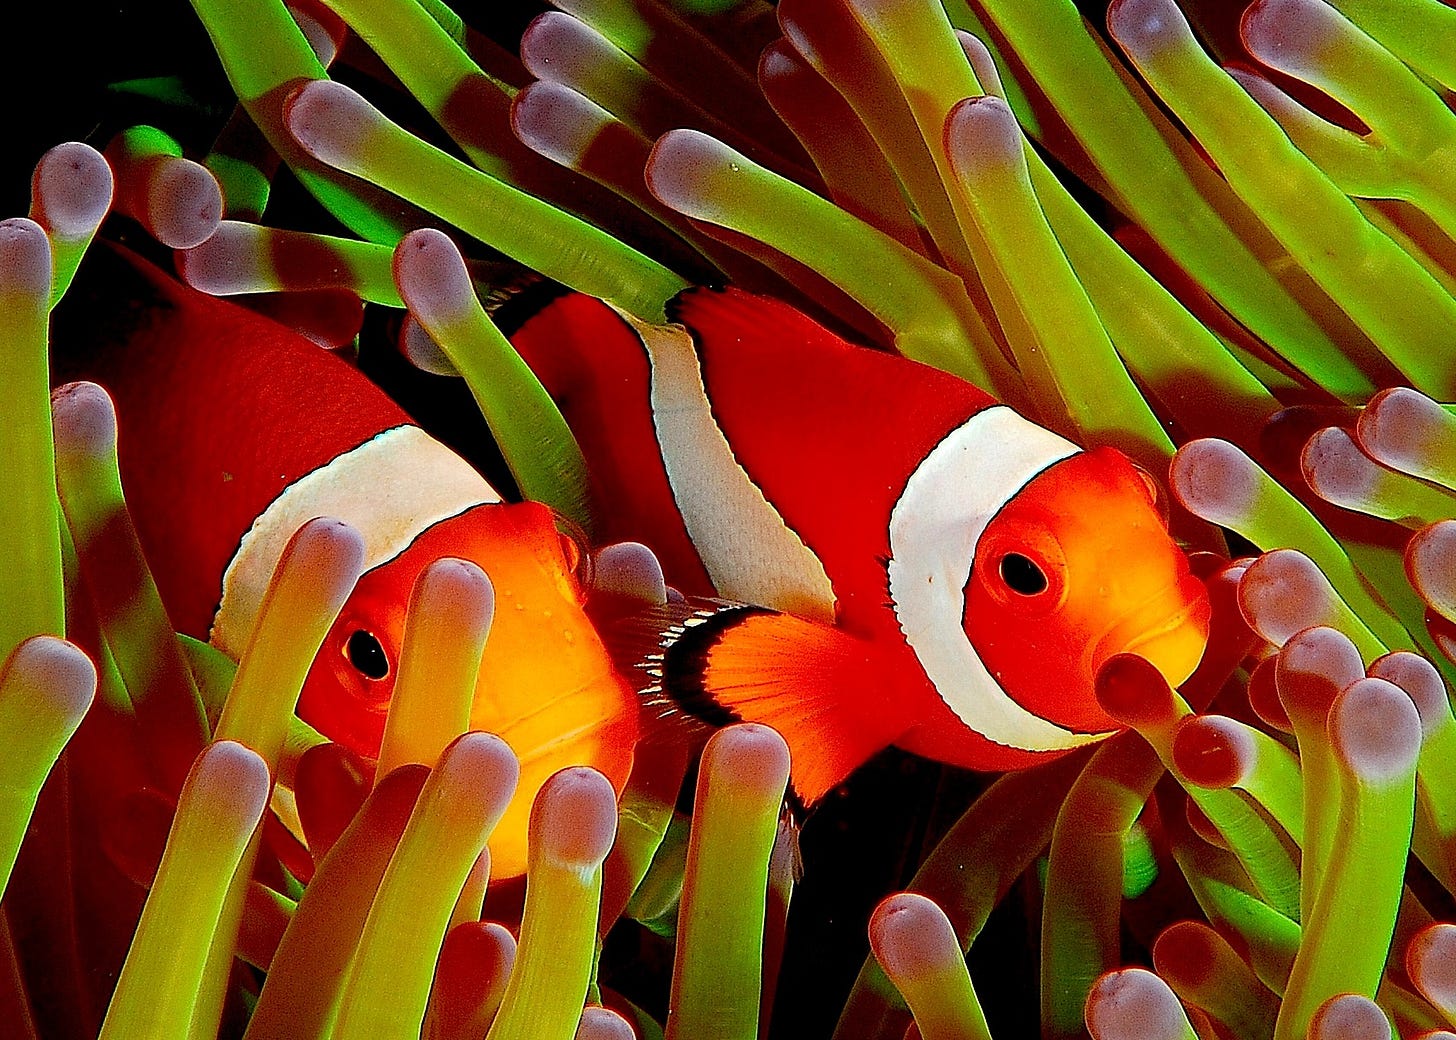 File:Ocellaris clownfish, Flickr.jpg - Wikimedia Commons